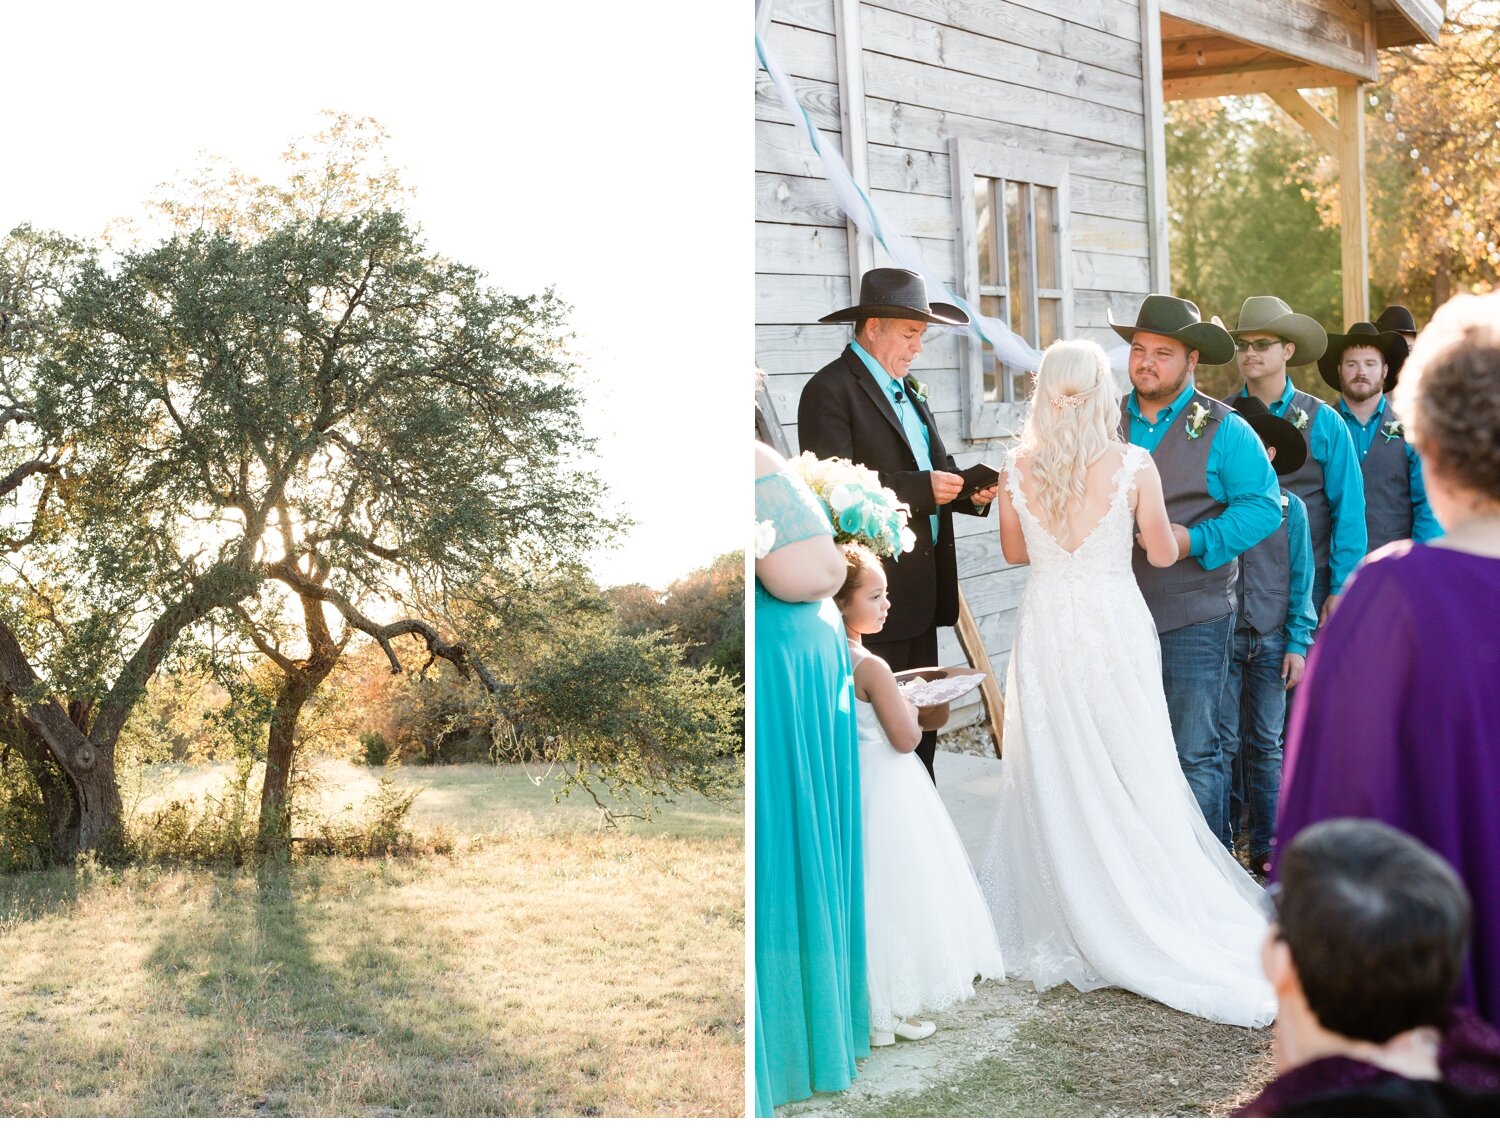 Destinnee + Chance Rustic Barn Wedding at Elm Creek Ranch_0050.jpg